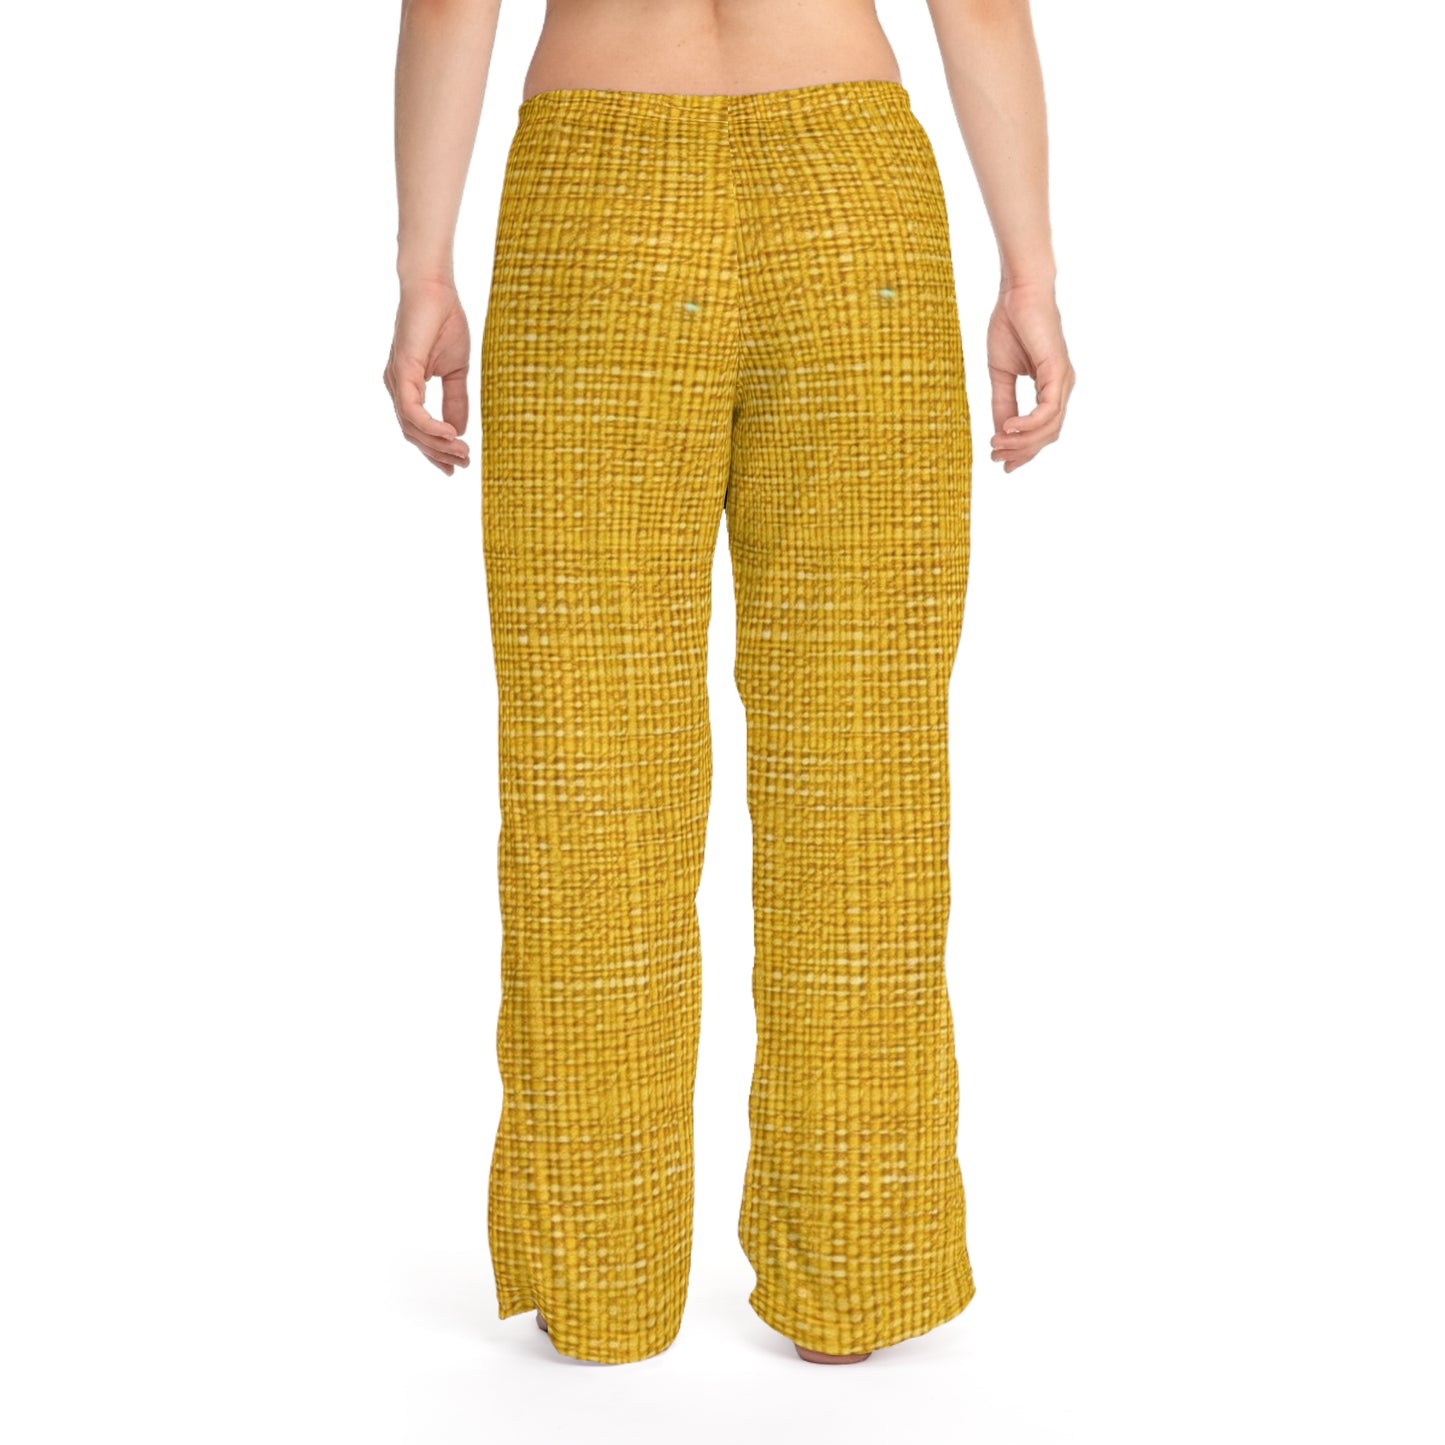 Radiant Sunny Yellow: Denim-Inspired Summer Fabric - Women's Pajama Pants (AOP)